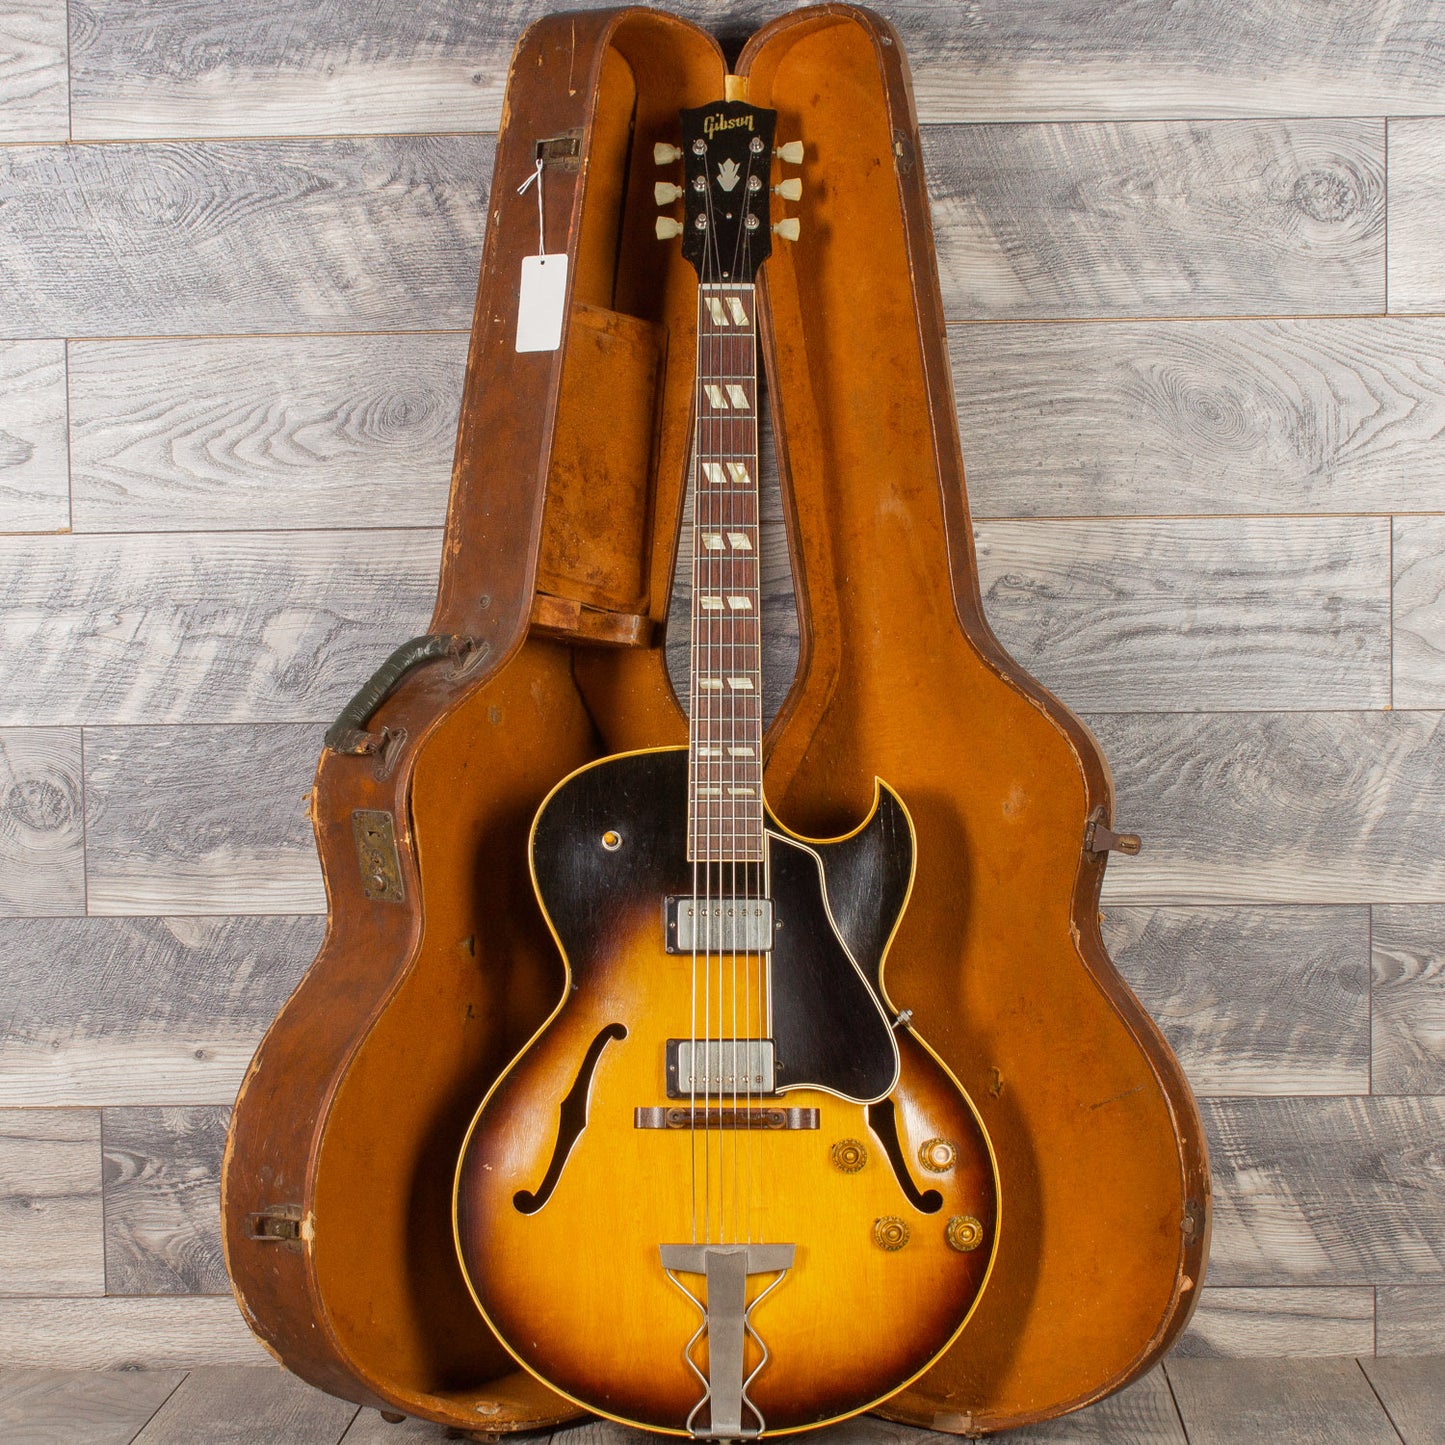 1957 Gibson ES-175D